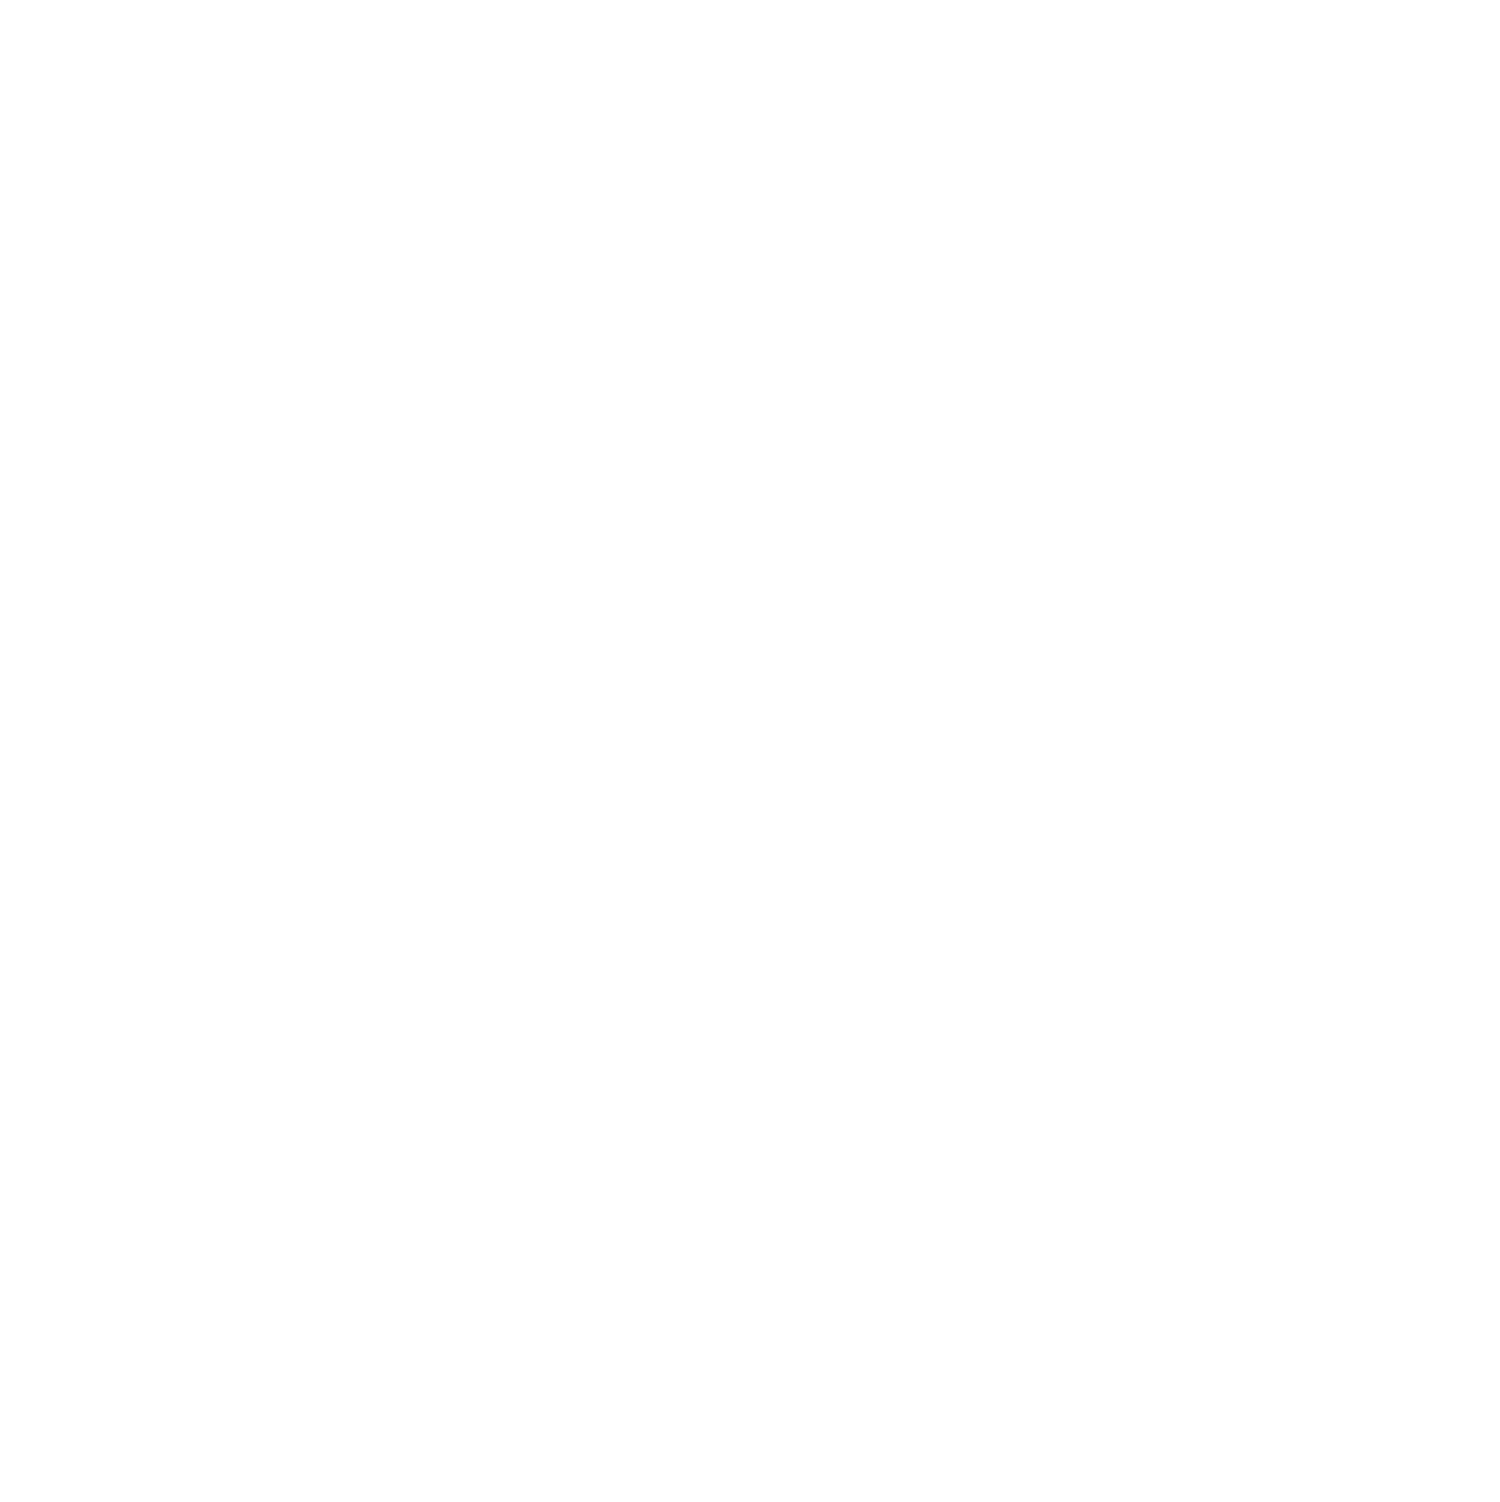 Metabolic Health Initiative